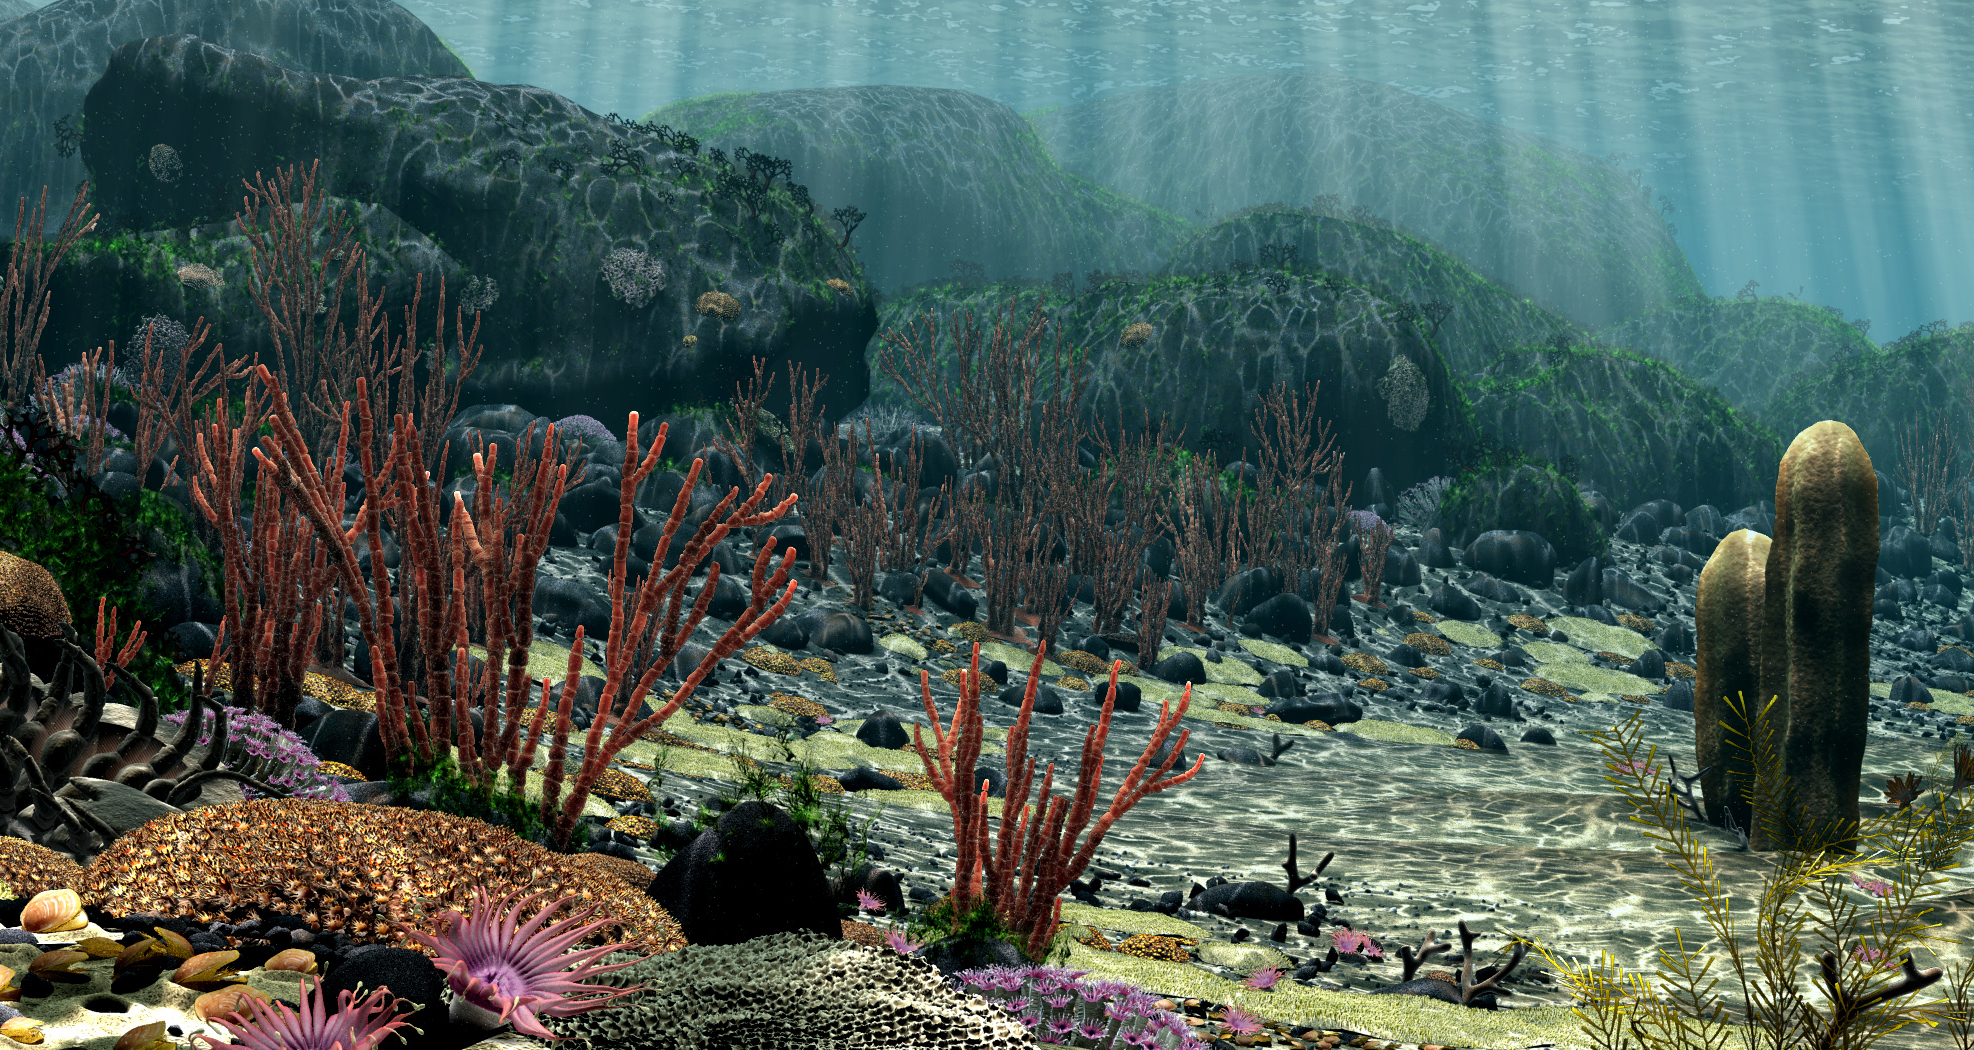 Close-up of underwater boulder field in Ancient Seas video exhibit.